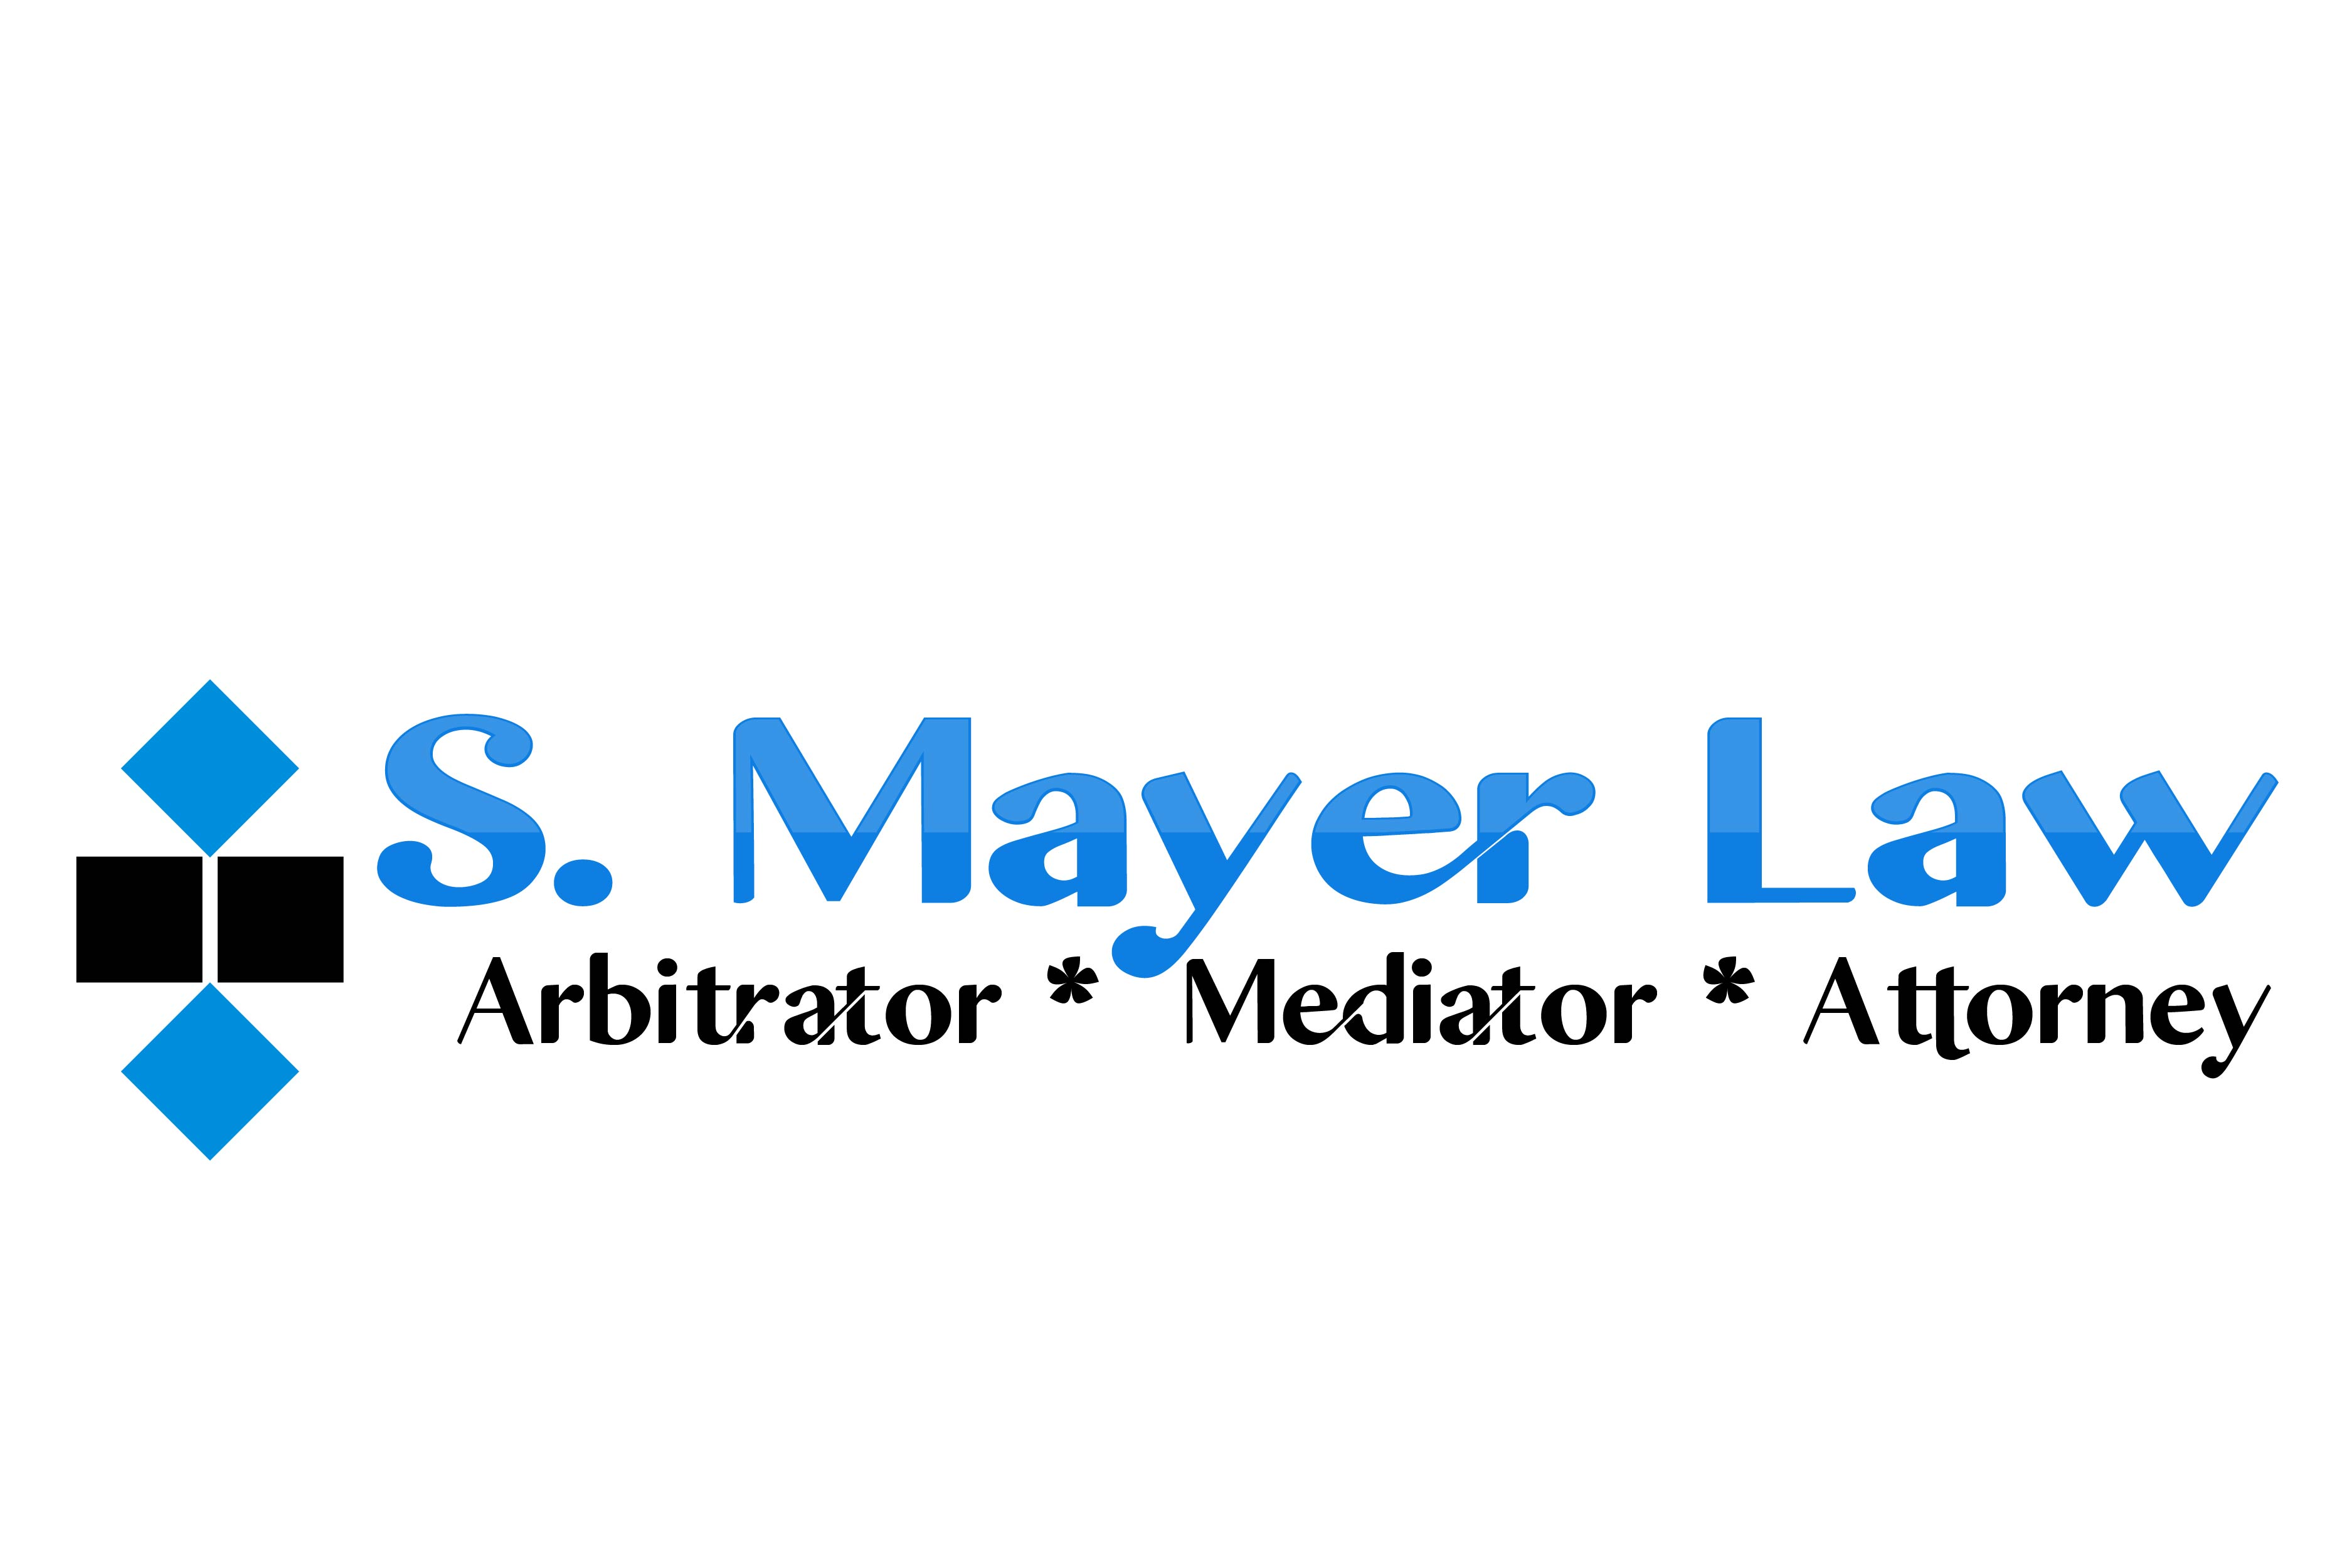 S. Mayer Law PLLC logo